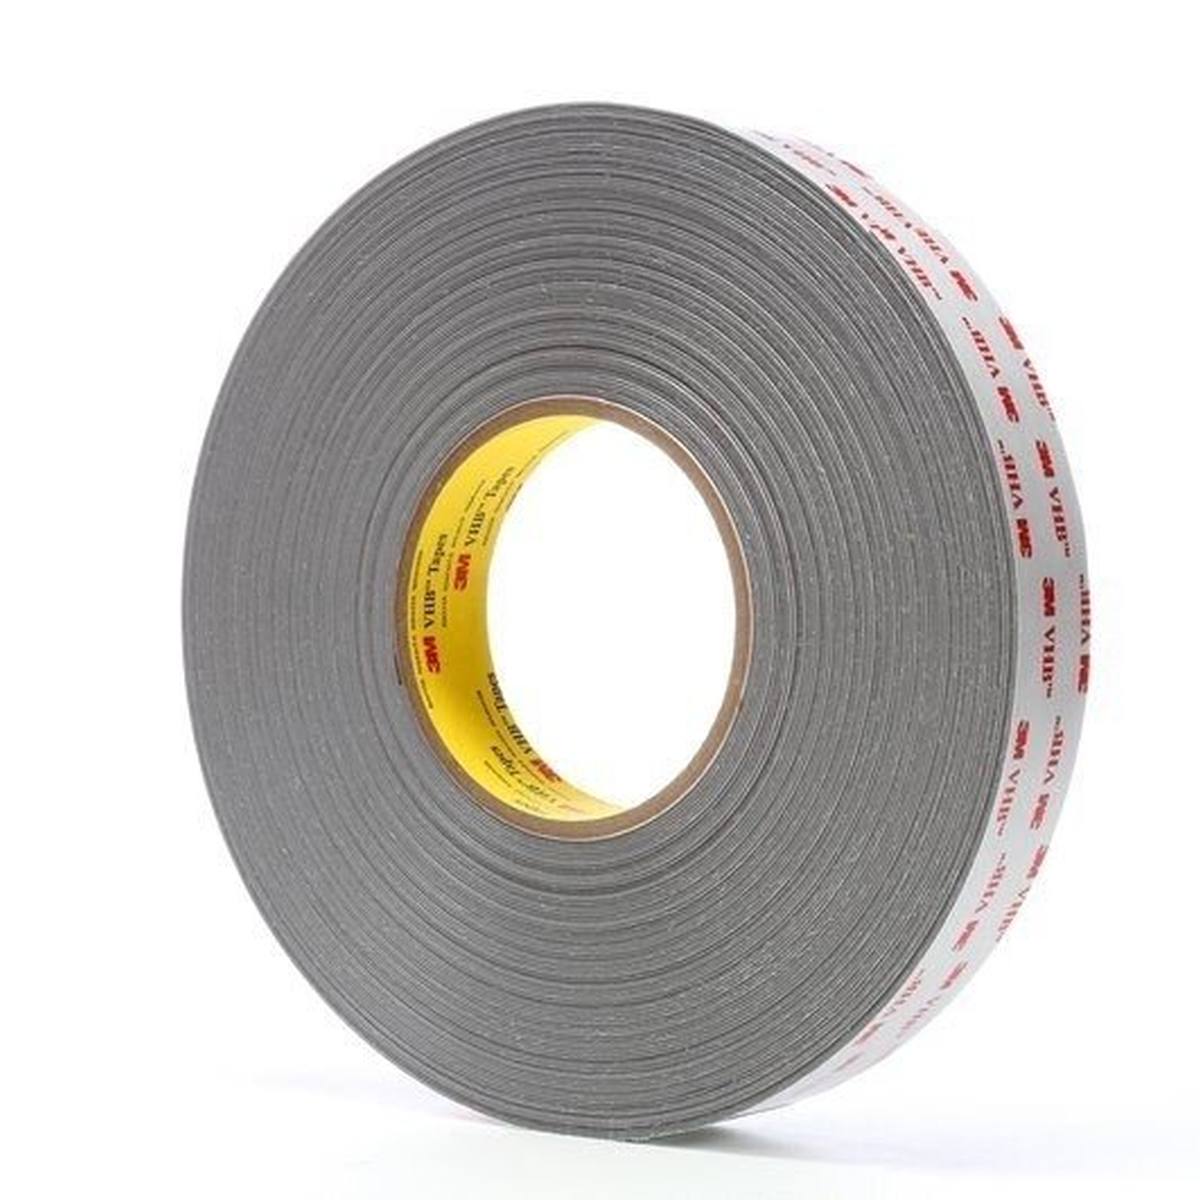 3M VHB adhesive tape RP 32 P, gray, 6 mm x 66 m, 0.8 mm